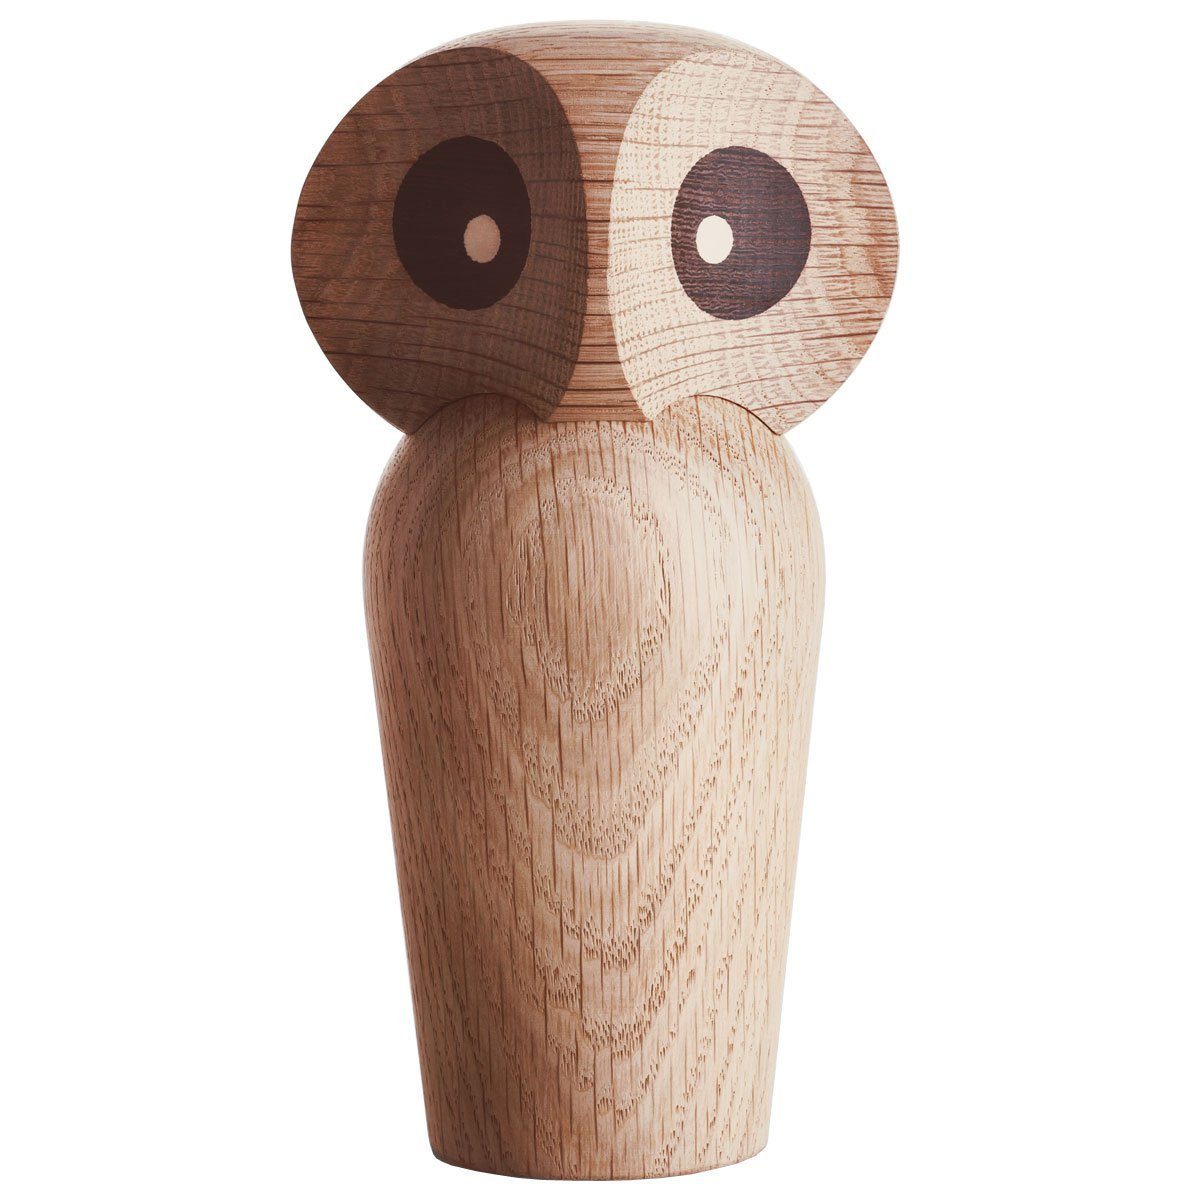 Architectmade Dekofigur Owl (Large Höhe 17 cm); Dekoobjekt Holzfigur Eule aus Eiche; Dänischer Designklassiker Natur